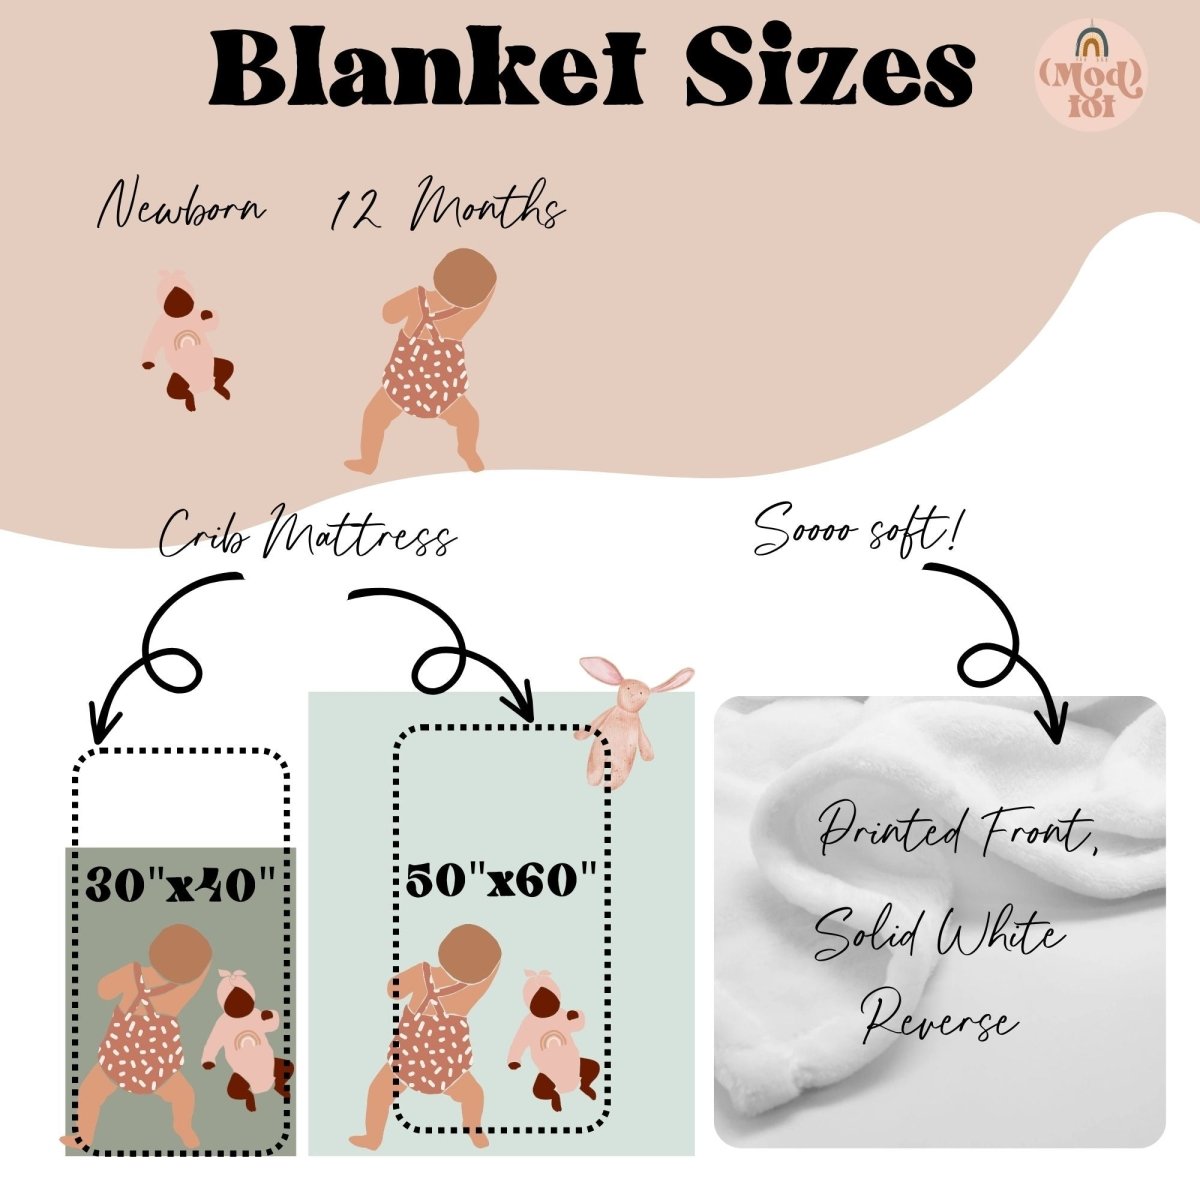 Boho Desert Personalized Baby Blanket - Boho Desert, gender_boy, Personalized_Yes